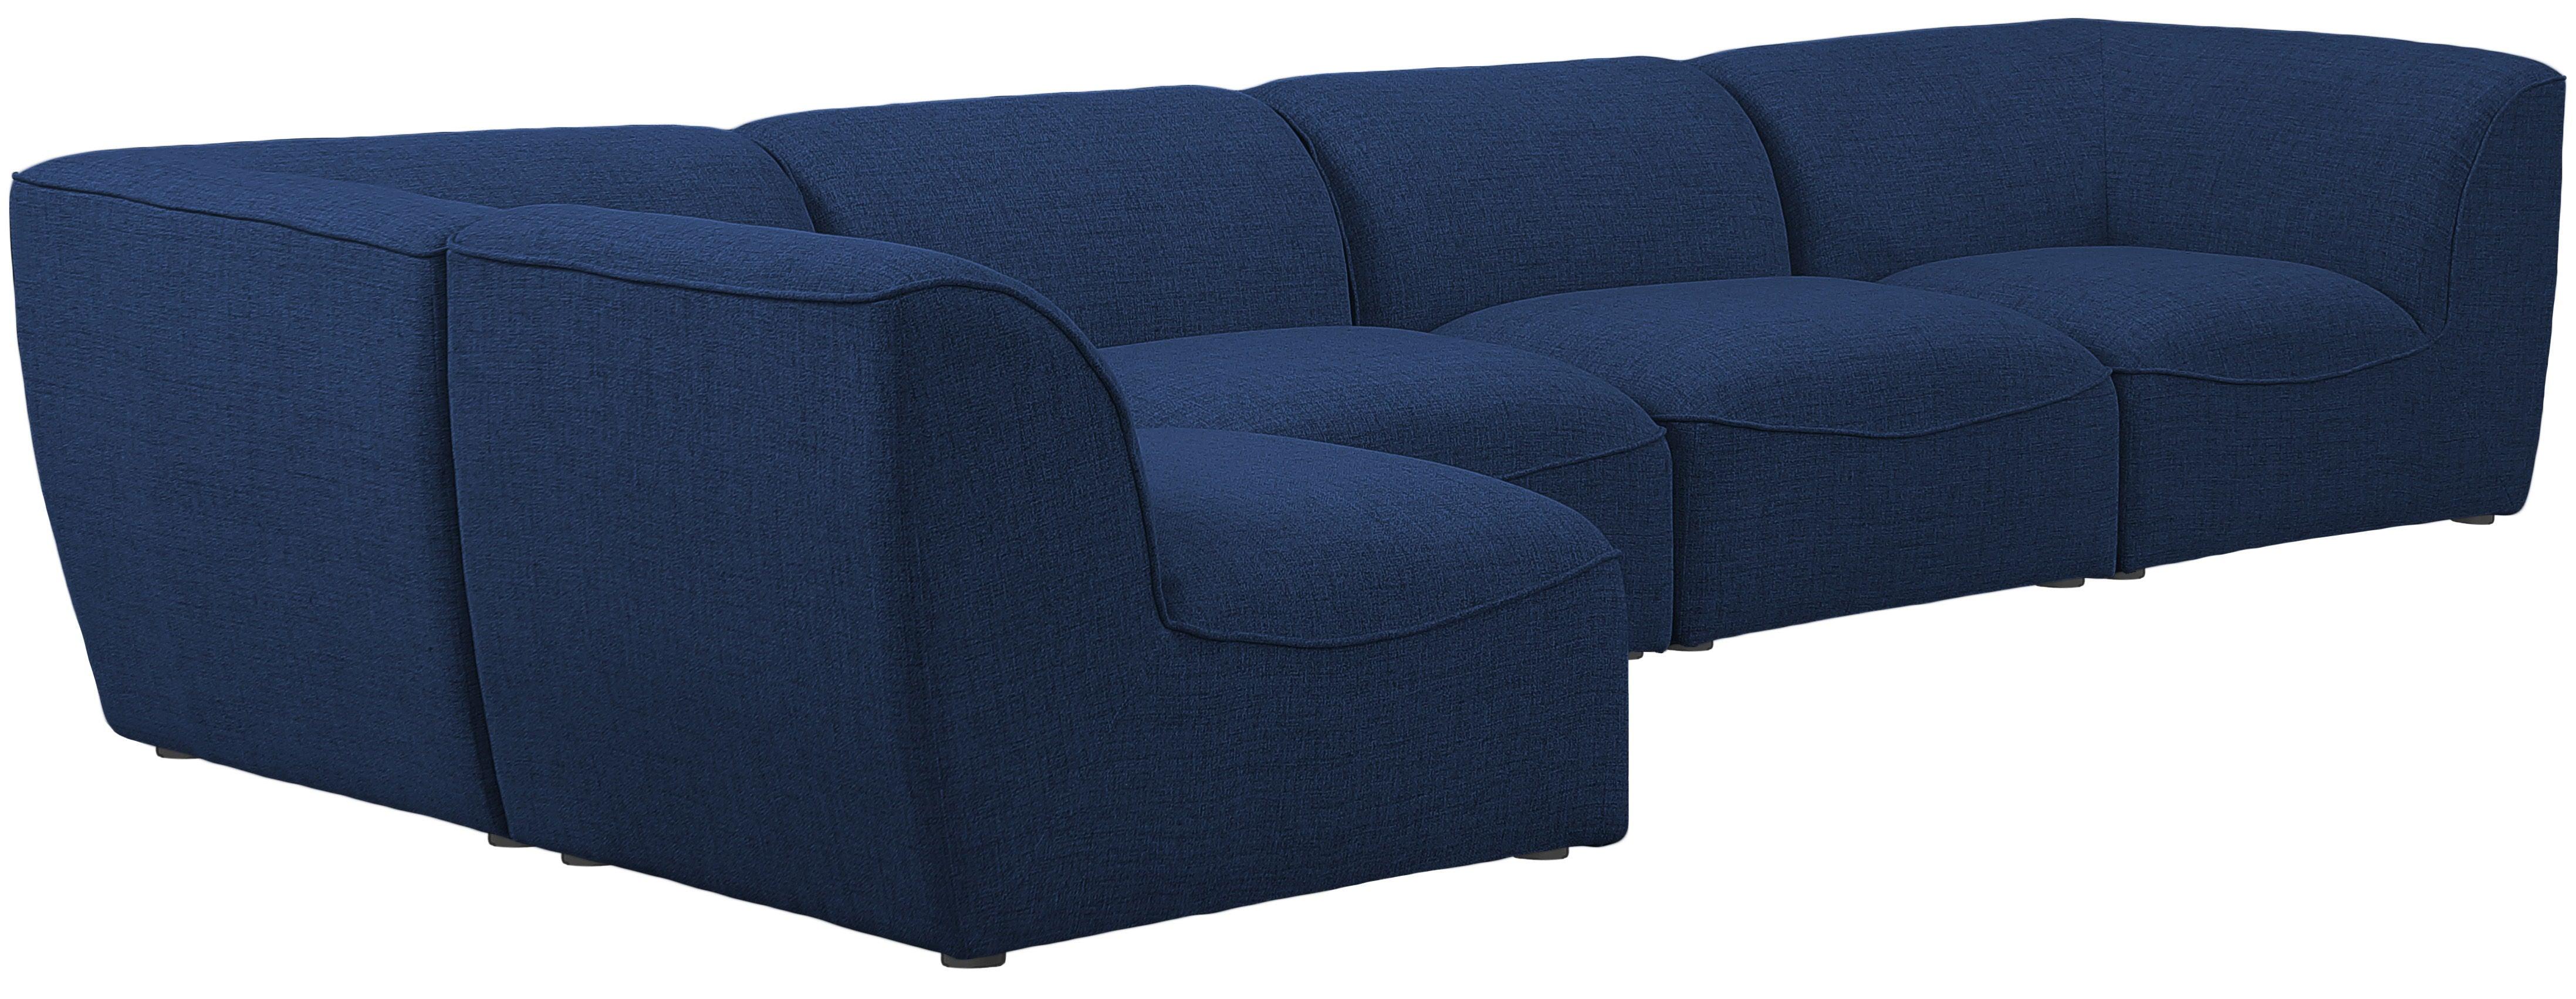 Meridian Furniture - Miramar - Modular Sectional 5 Piece - Navy - 5th Avenue Furniture